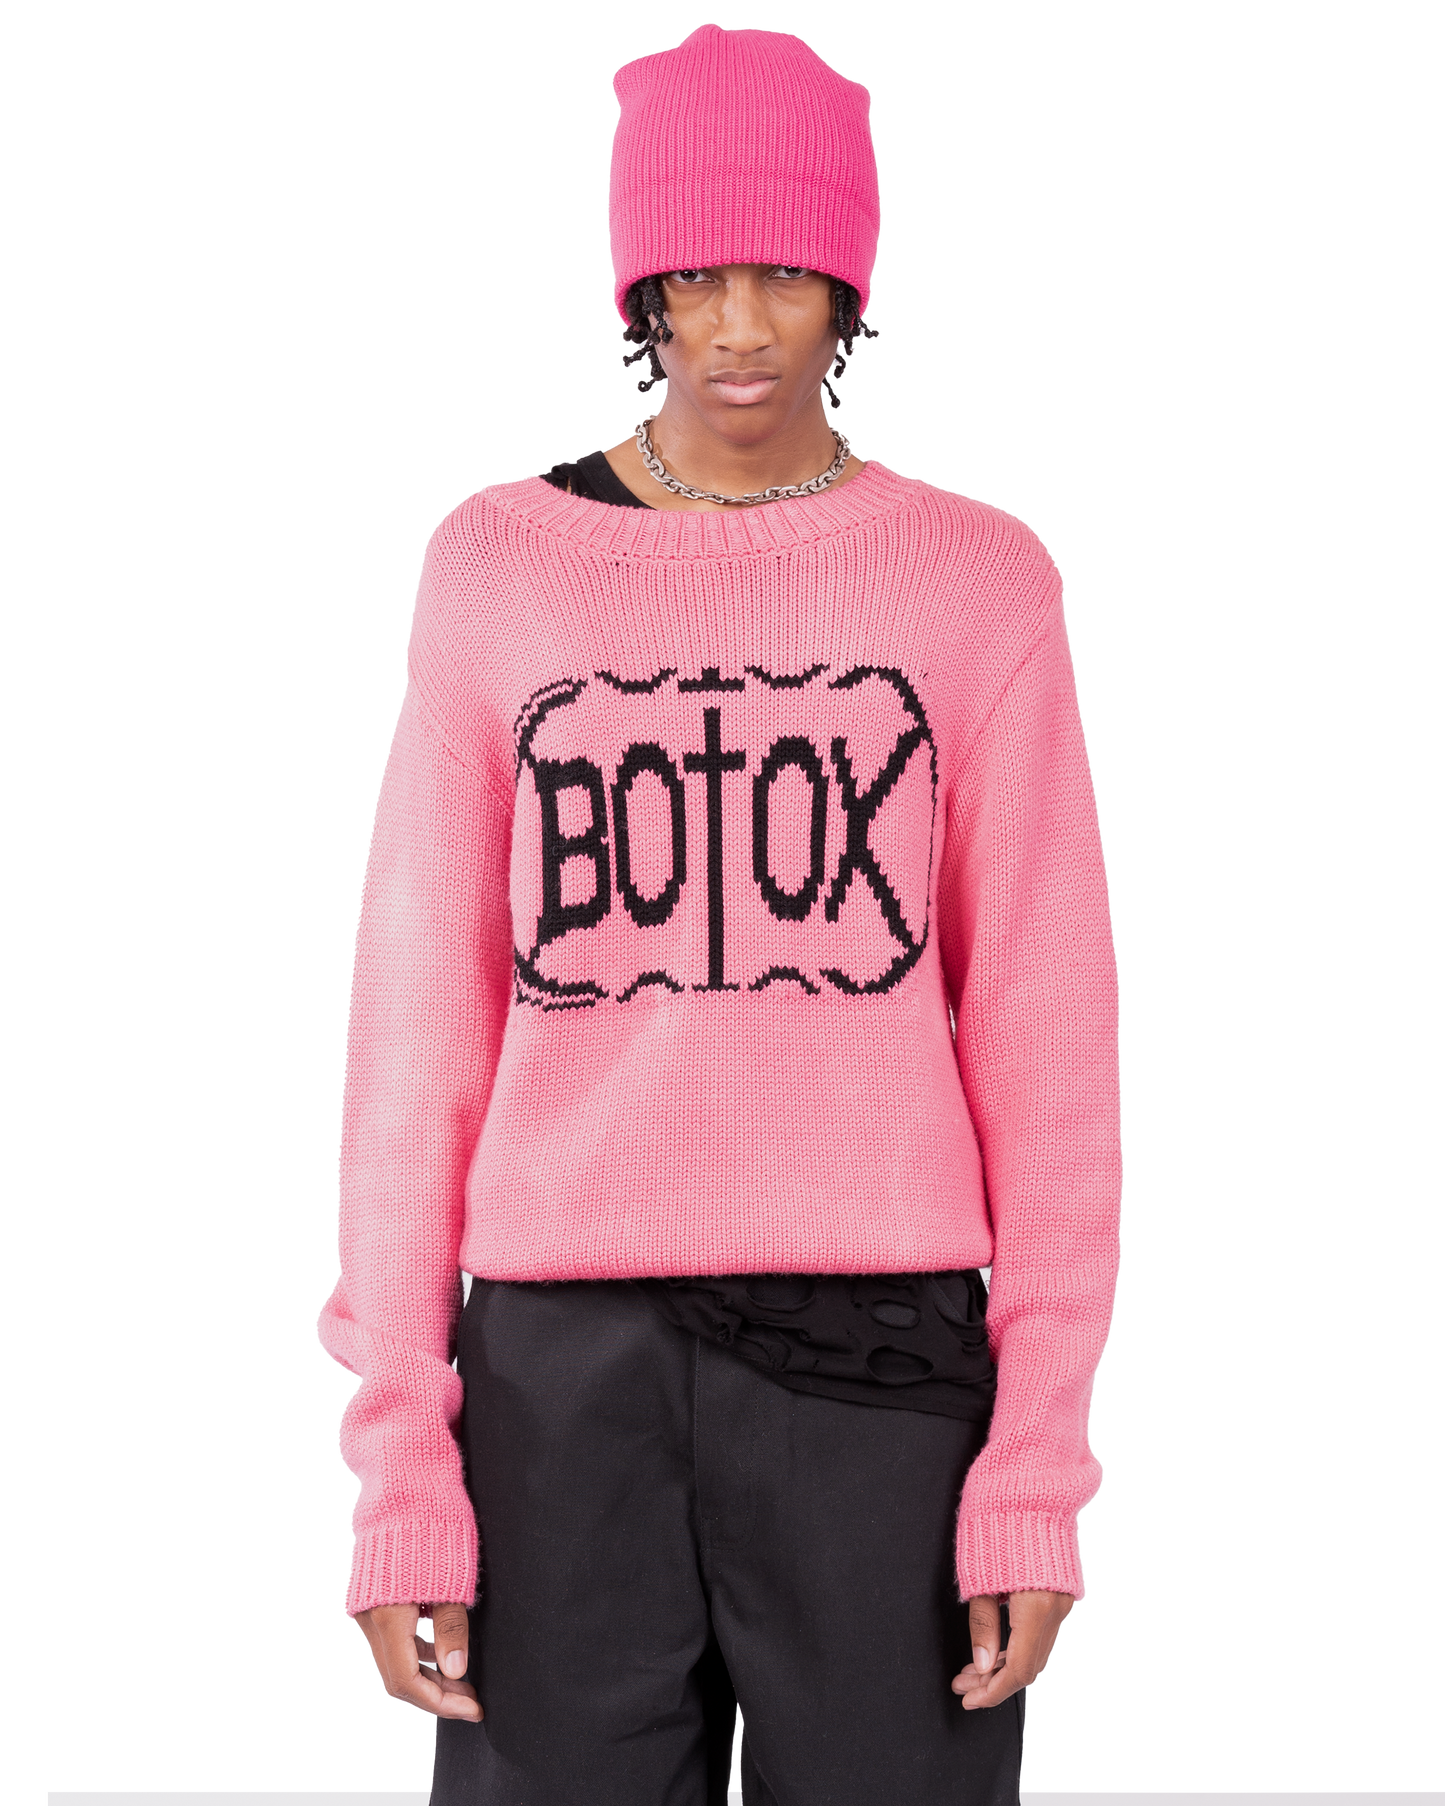 Botox Sweater Faded Pink